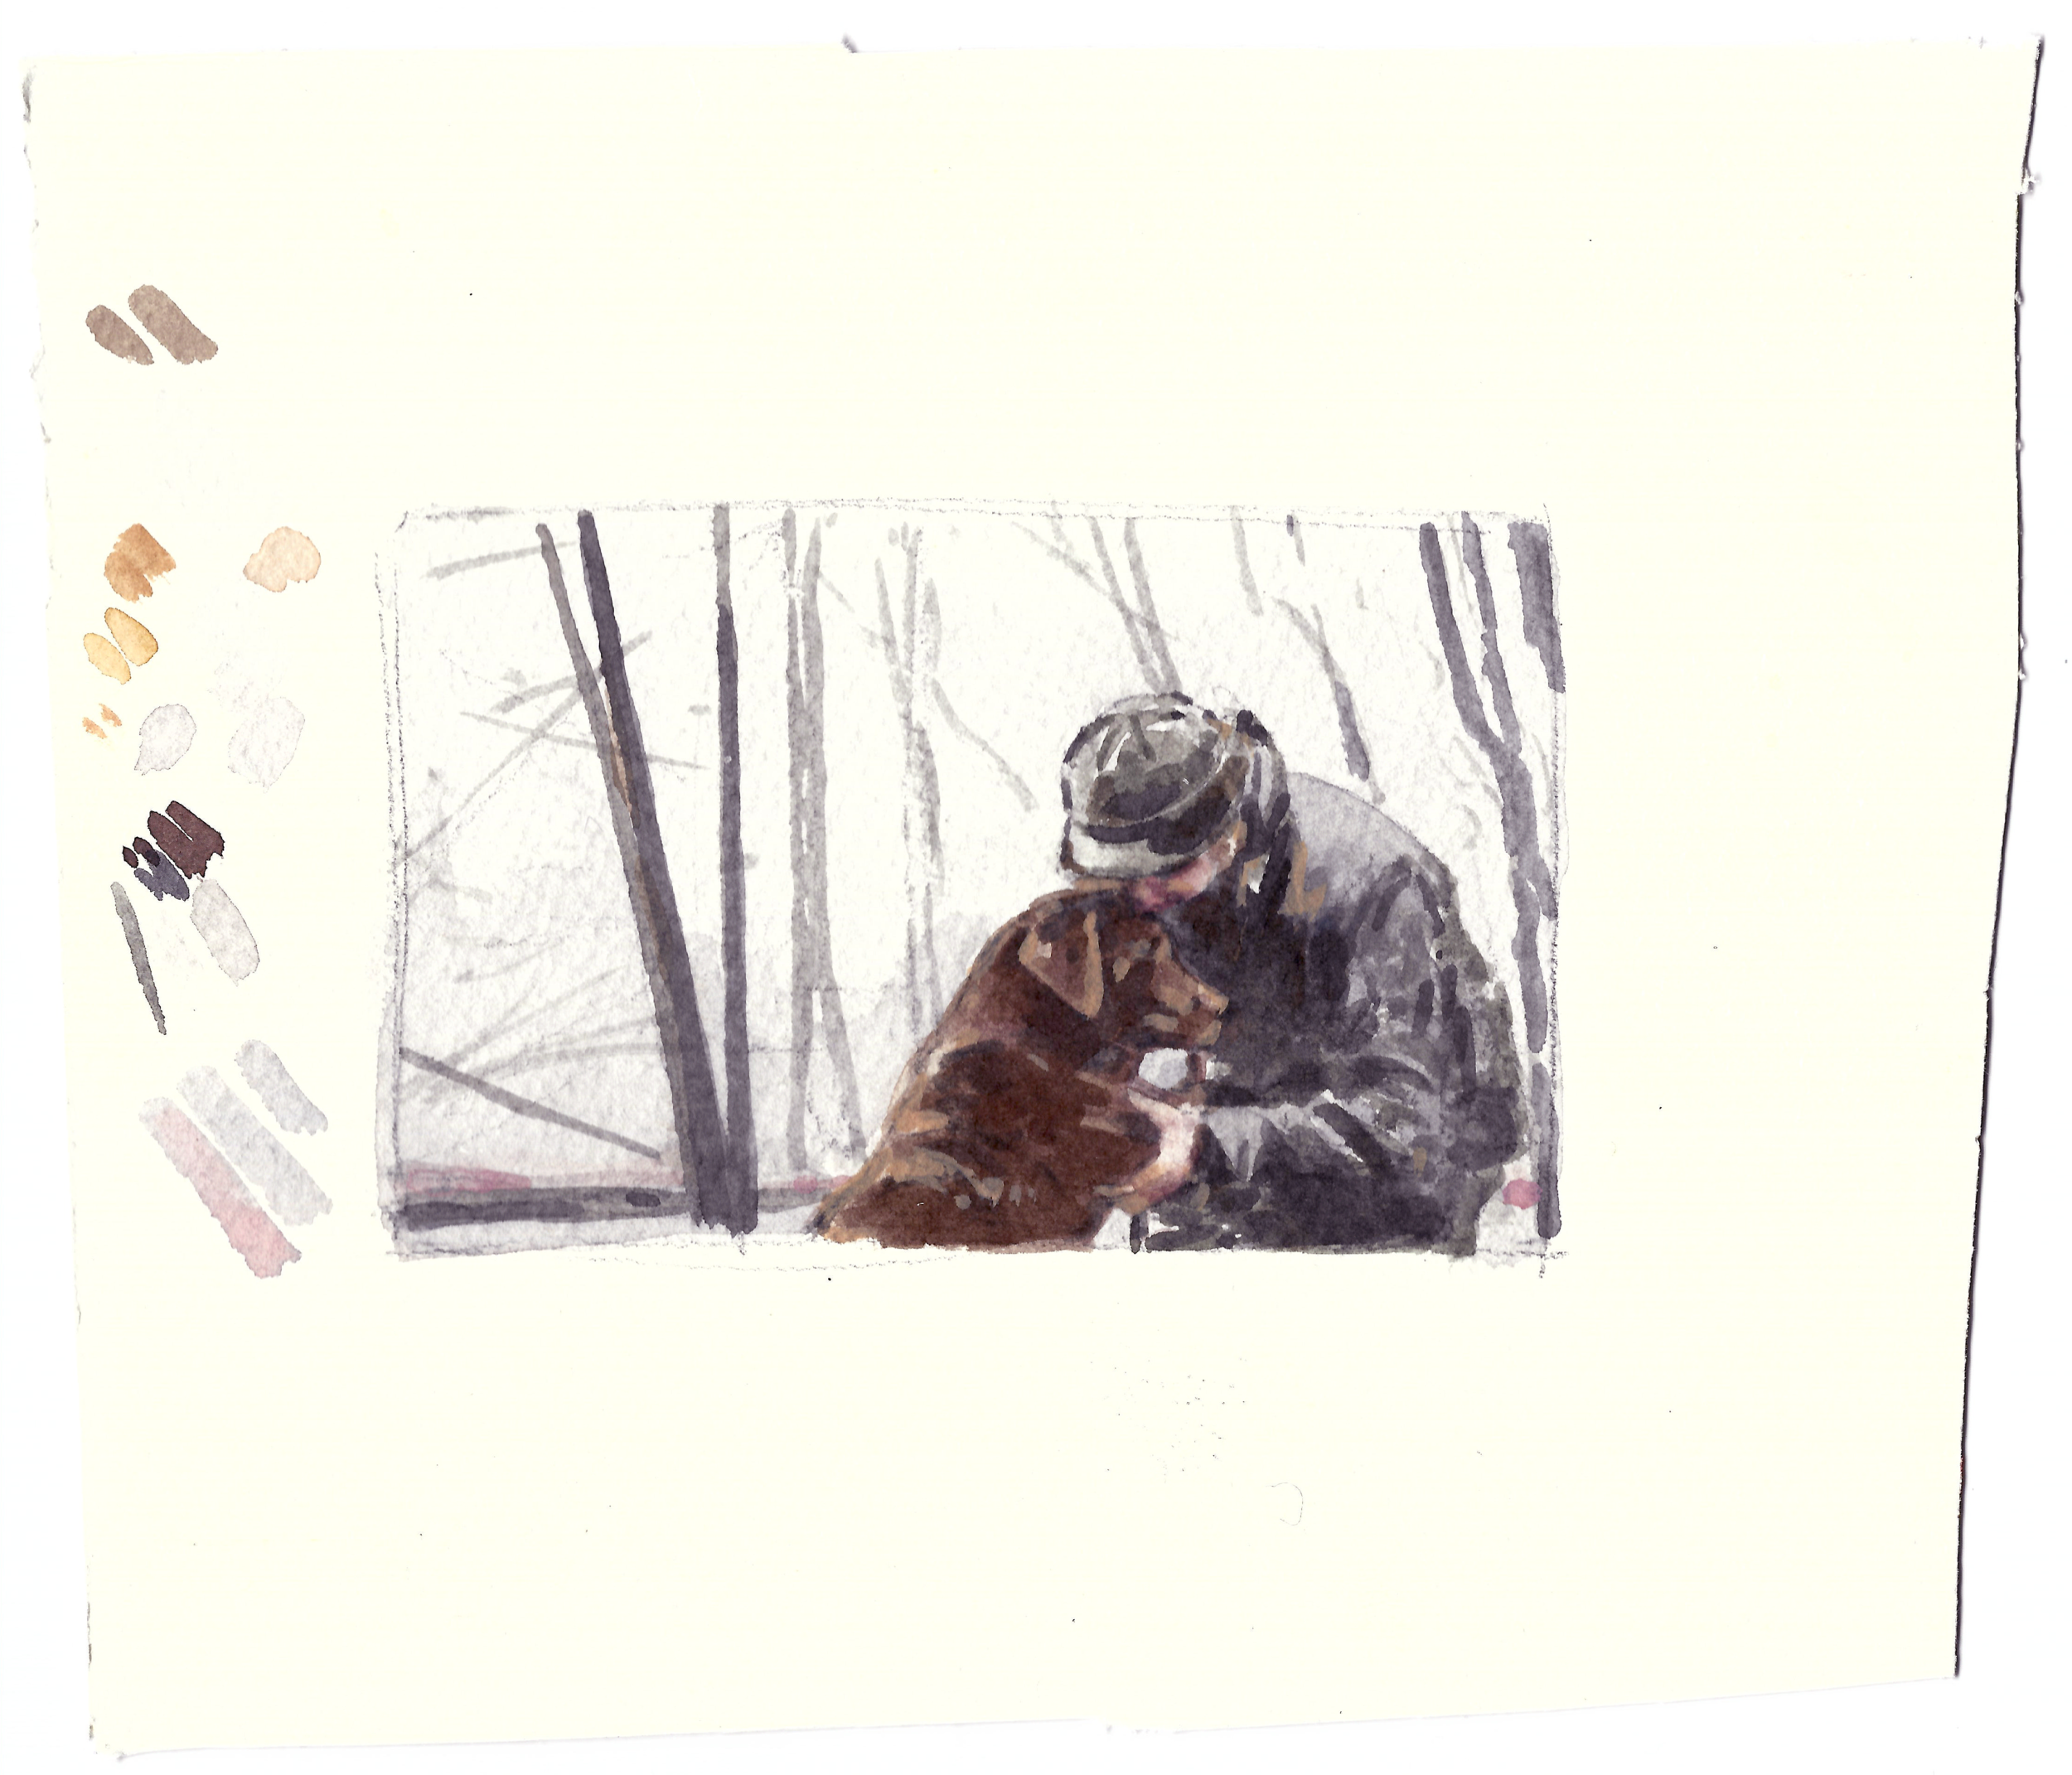 Teal Blake illustration of a hunter and his dog